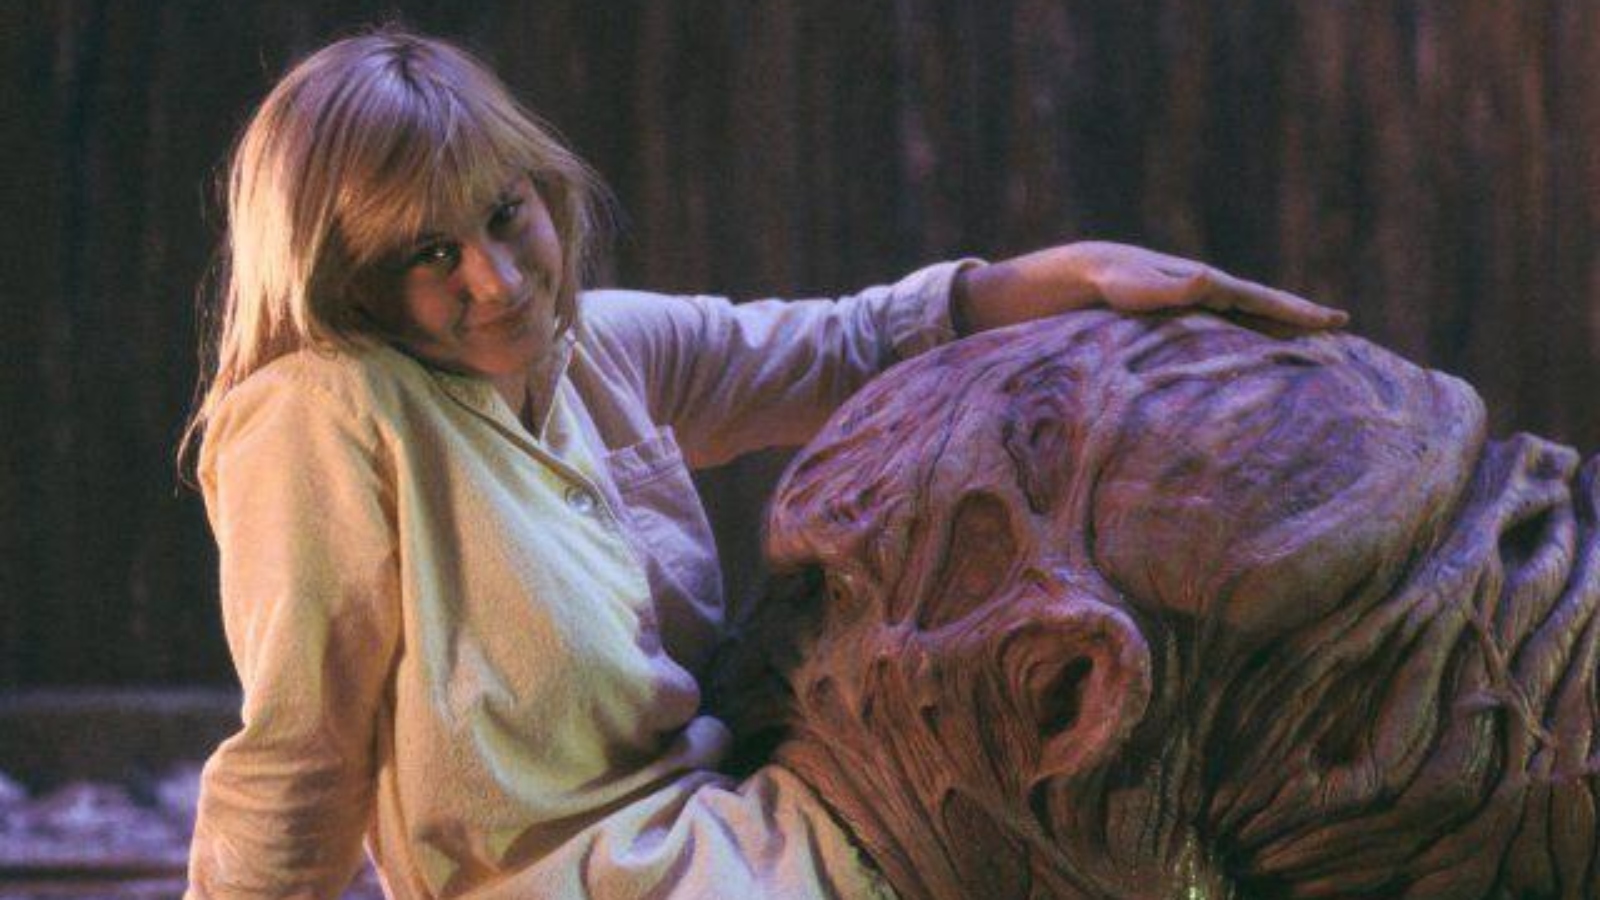 Patricia Arquette in A Nightmare on Elm Street III: Dream Warriors